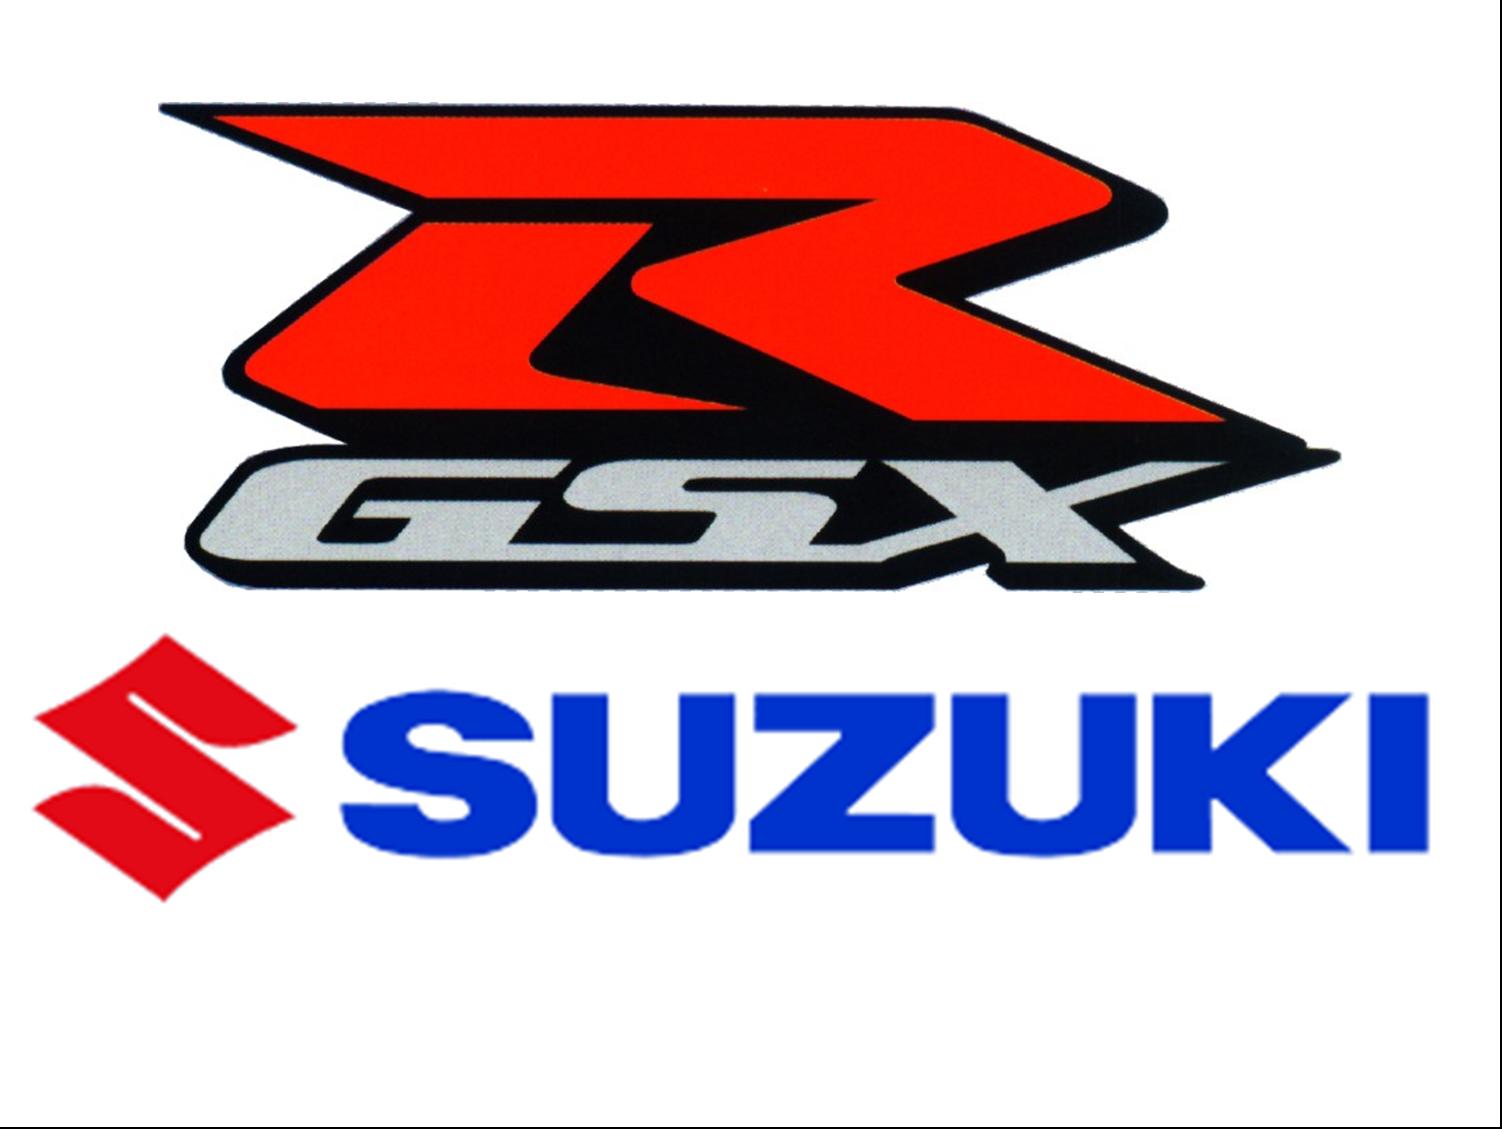 suzuki logo wallpaper,text,font,logo,brand,graphics